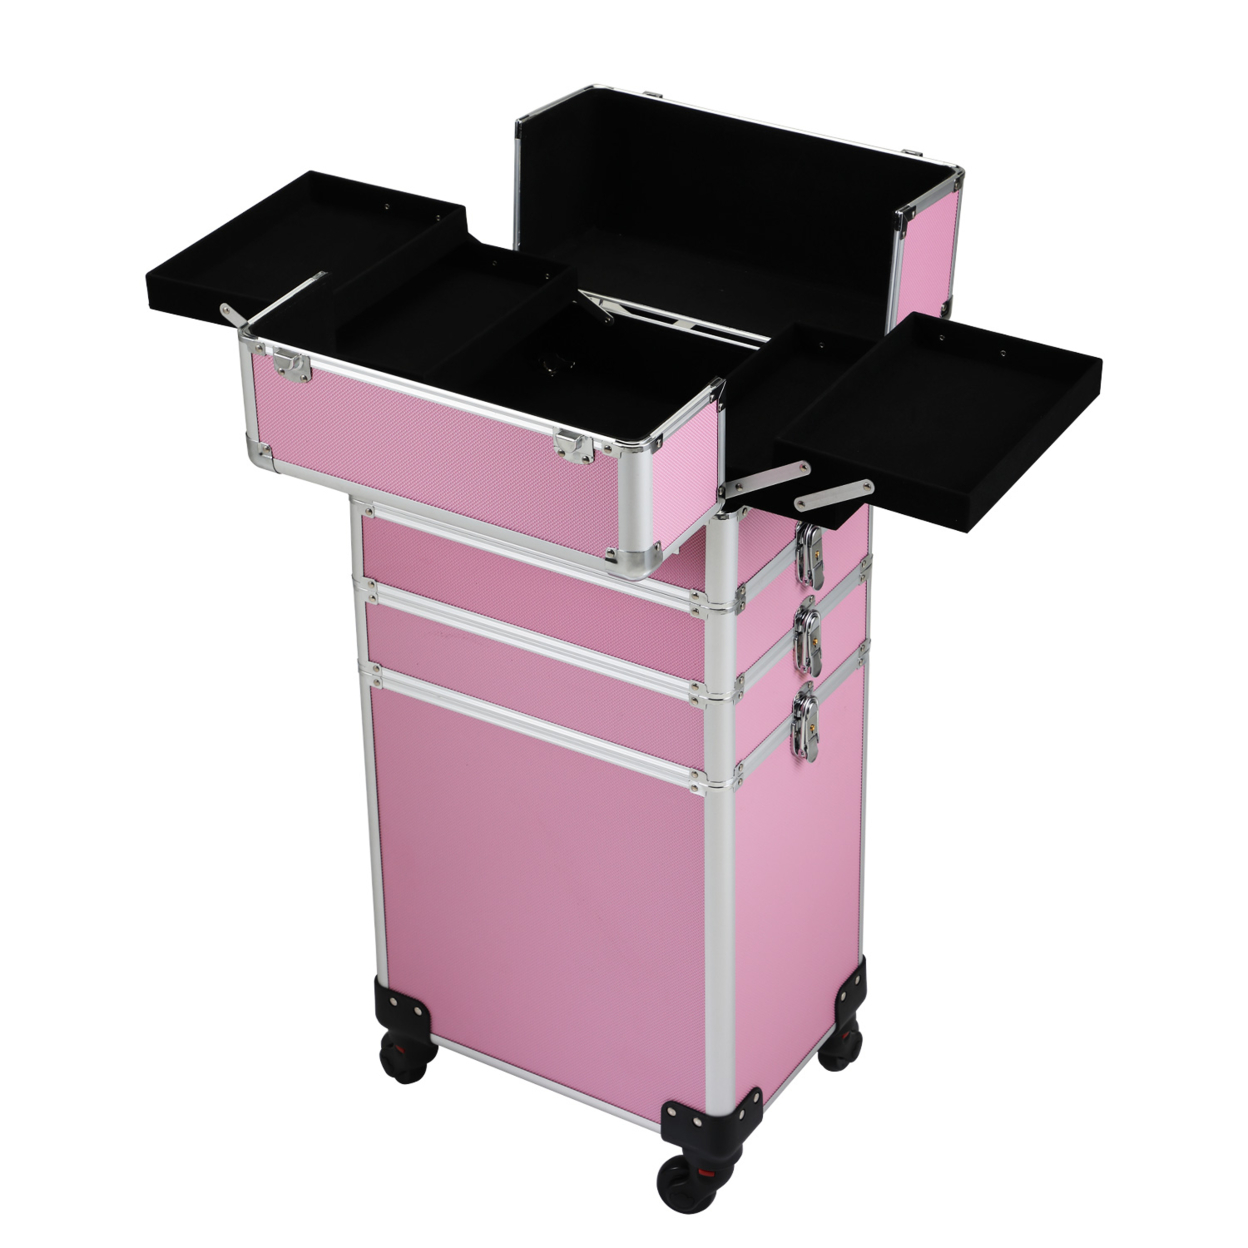 4-in-1 Makeup Travel Case with 360ï¿½ï¿½ Rolling Wheels, Locks, Keys and Adjustable Dividers, Pink